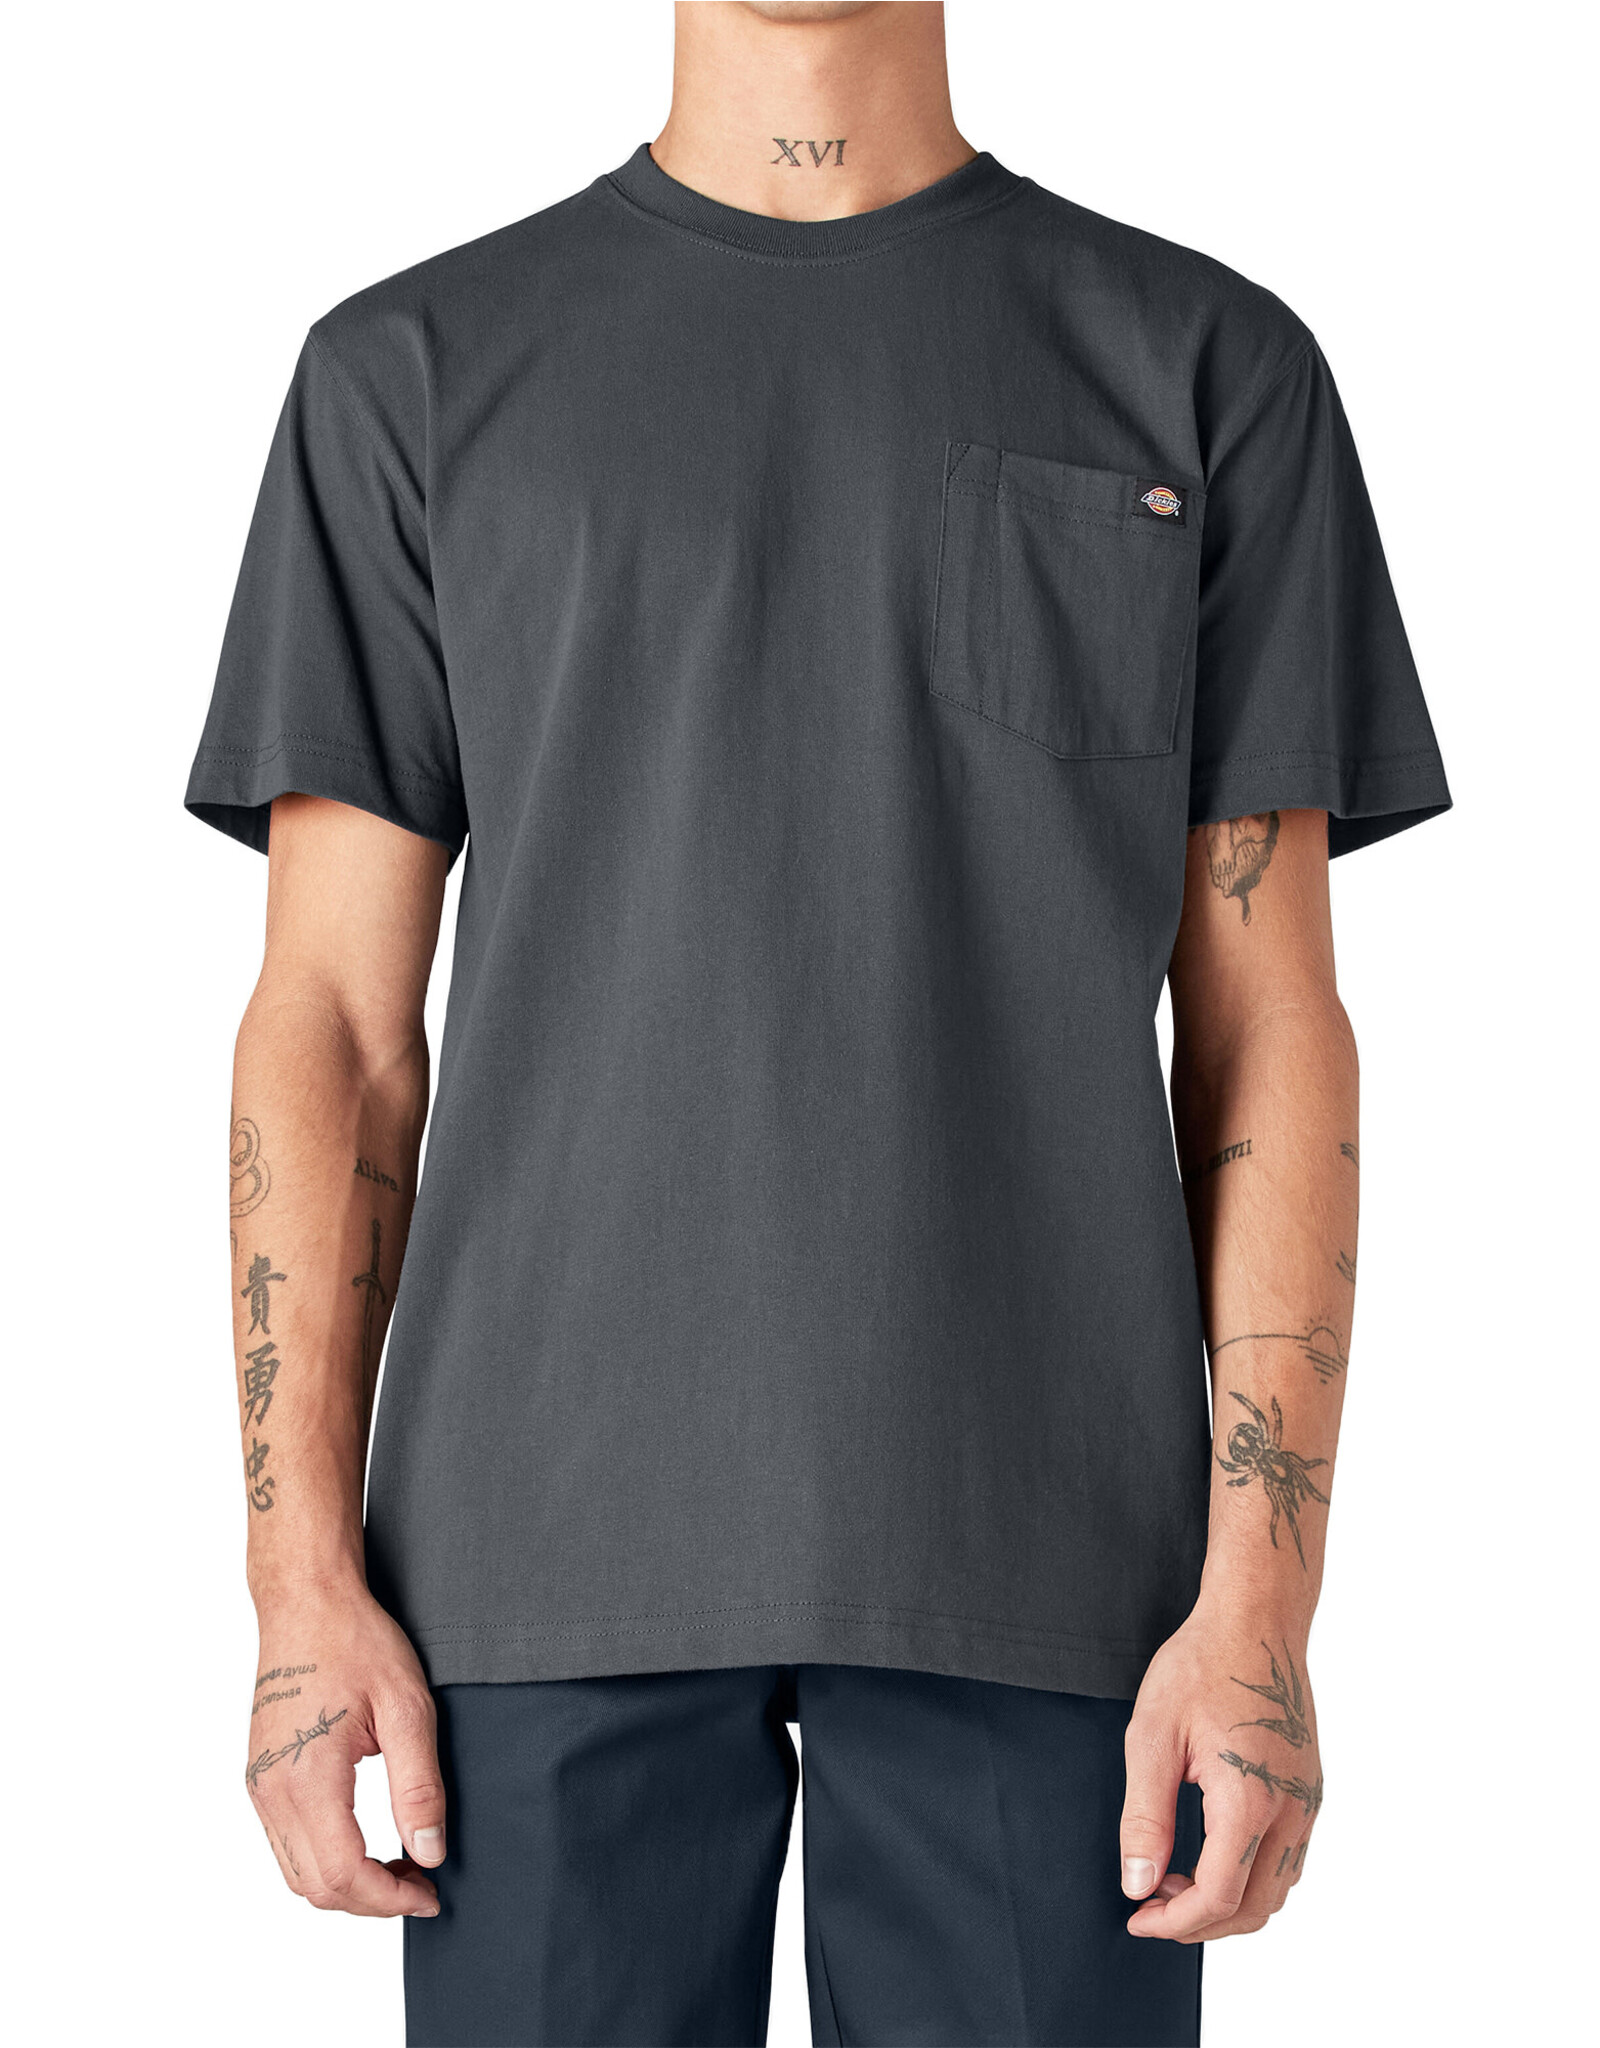 DICKIES Heavyweight Short Sleeve Pocket T-Shirt Charcoal Grey - WS450CH